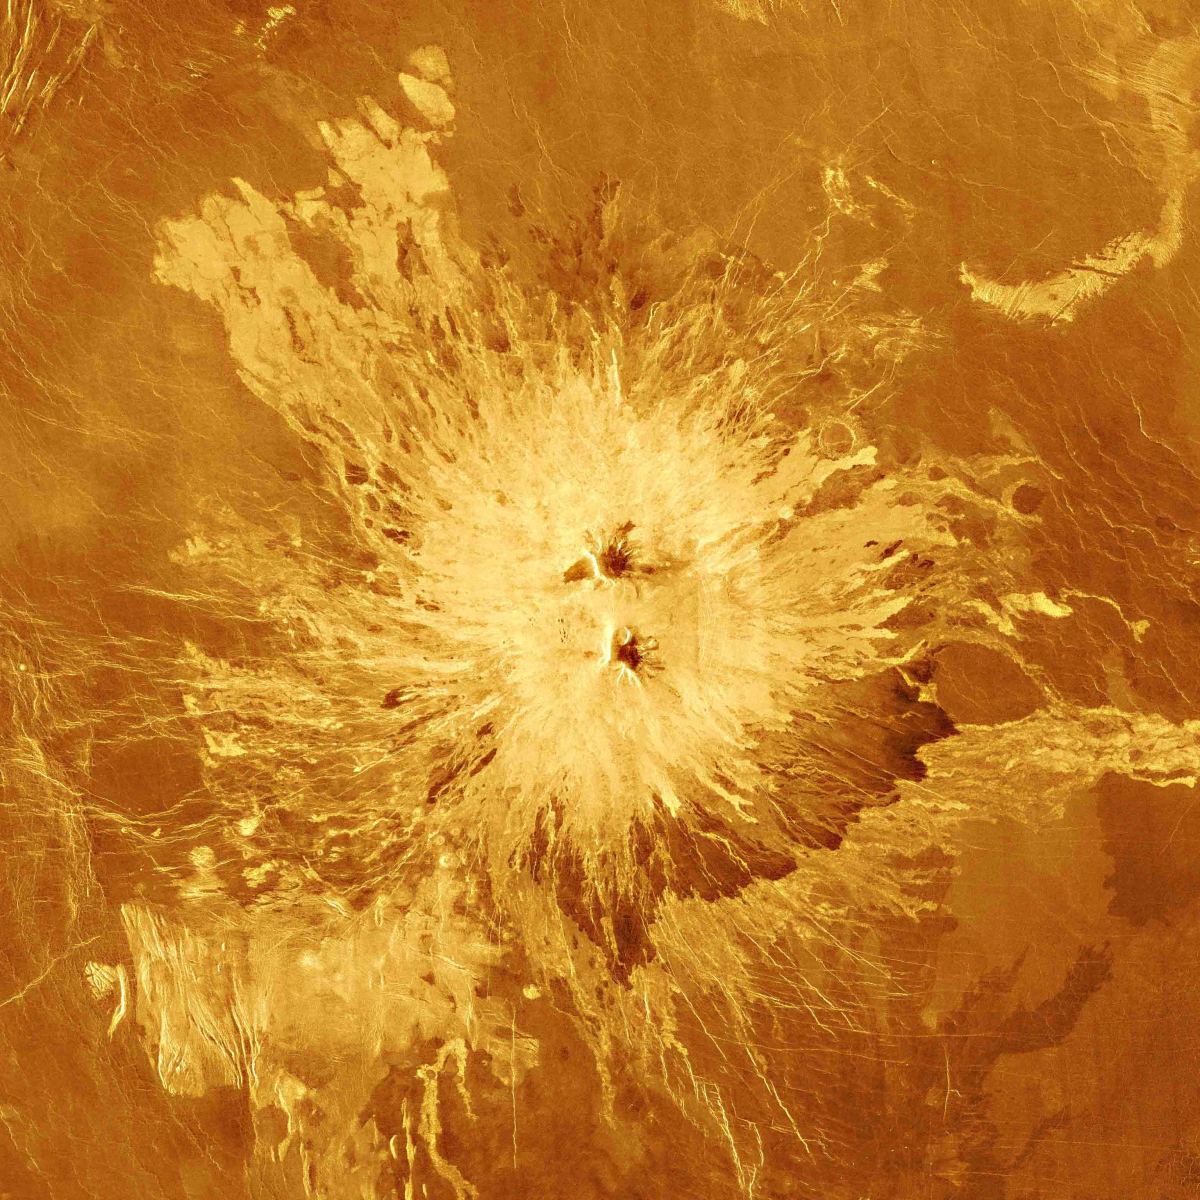 Sapas Mons, one of the giant shield volcanoes of Venus. 